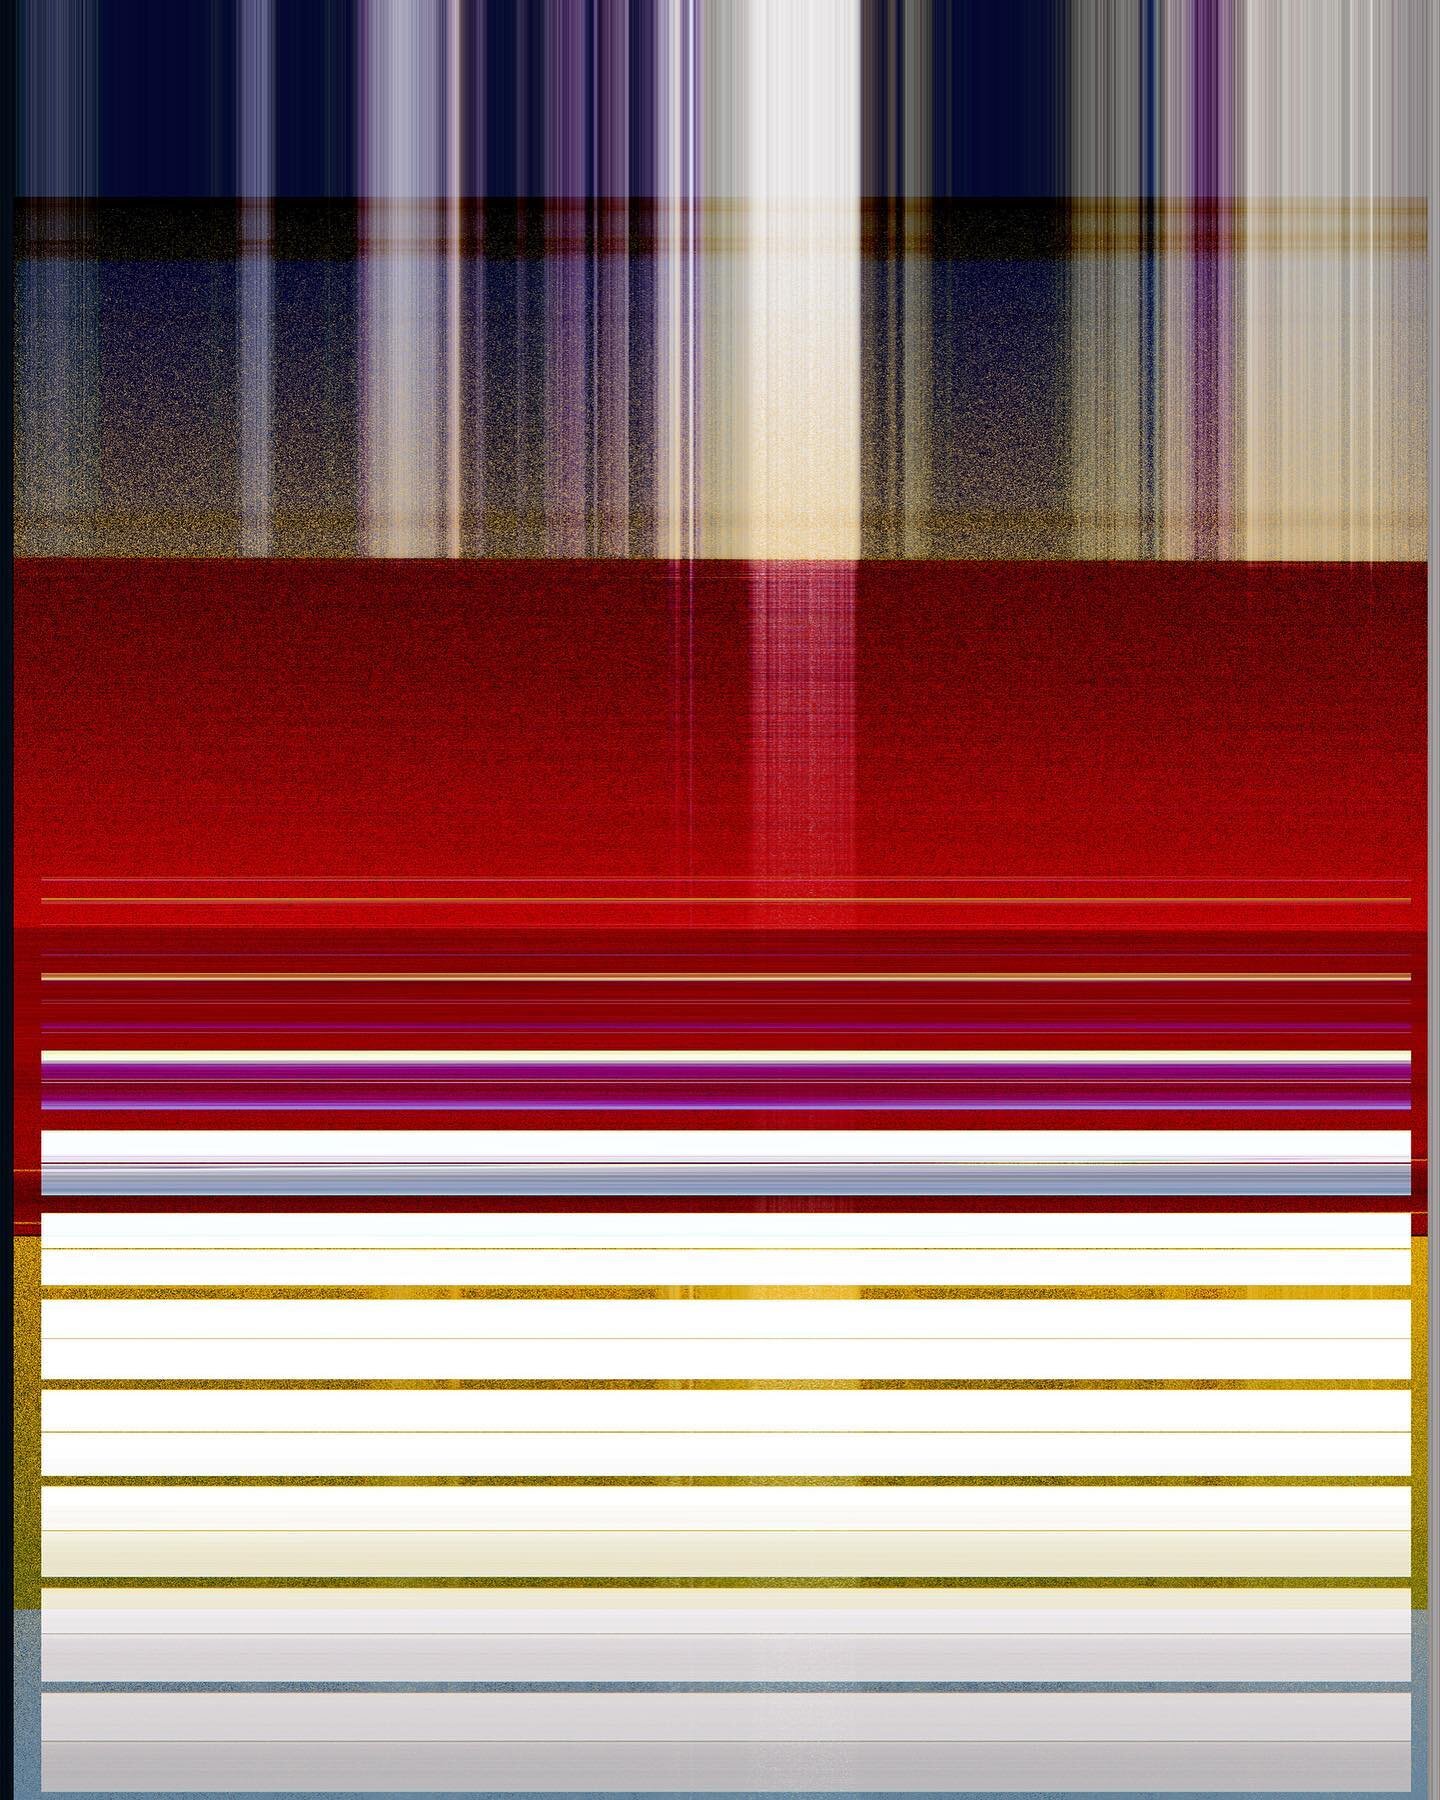 Data Composition 008﻿
Toru Izumida﻿
[2020]﻿
﻿
﻿
﻿
─────────────────﻿
#toruizumida #visualart #visualartist #artwork #art #artist #abstract #abstractart #digitalart #digitalartist #graphicdesign #graphic #photography #newmediaart #newmediaartist #cont